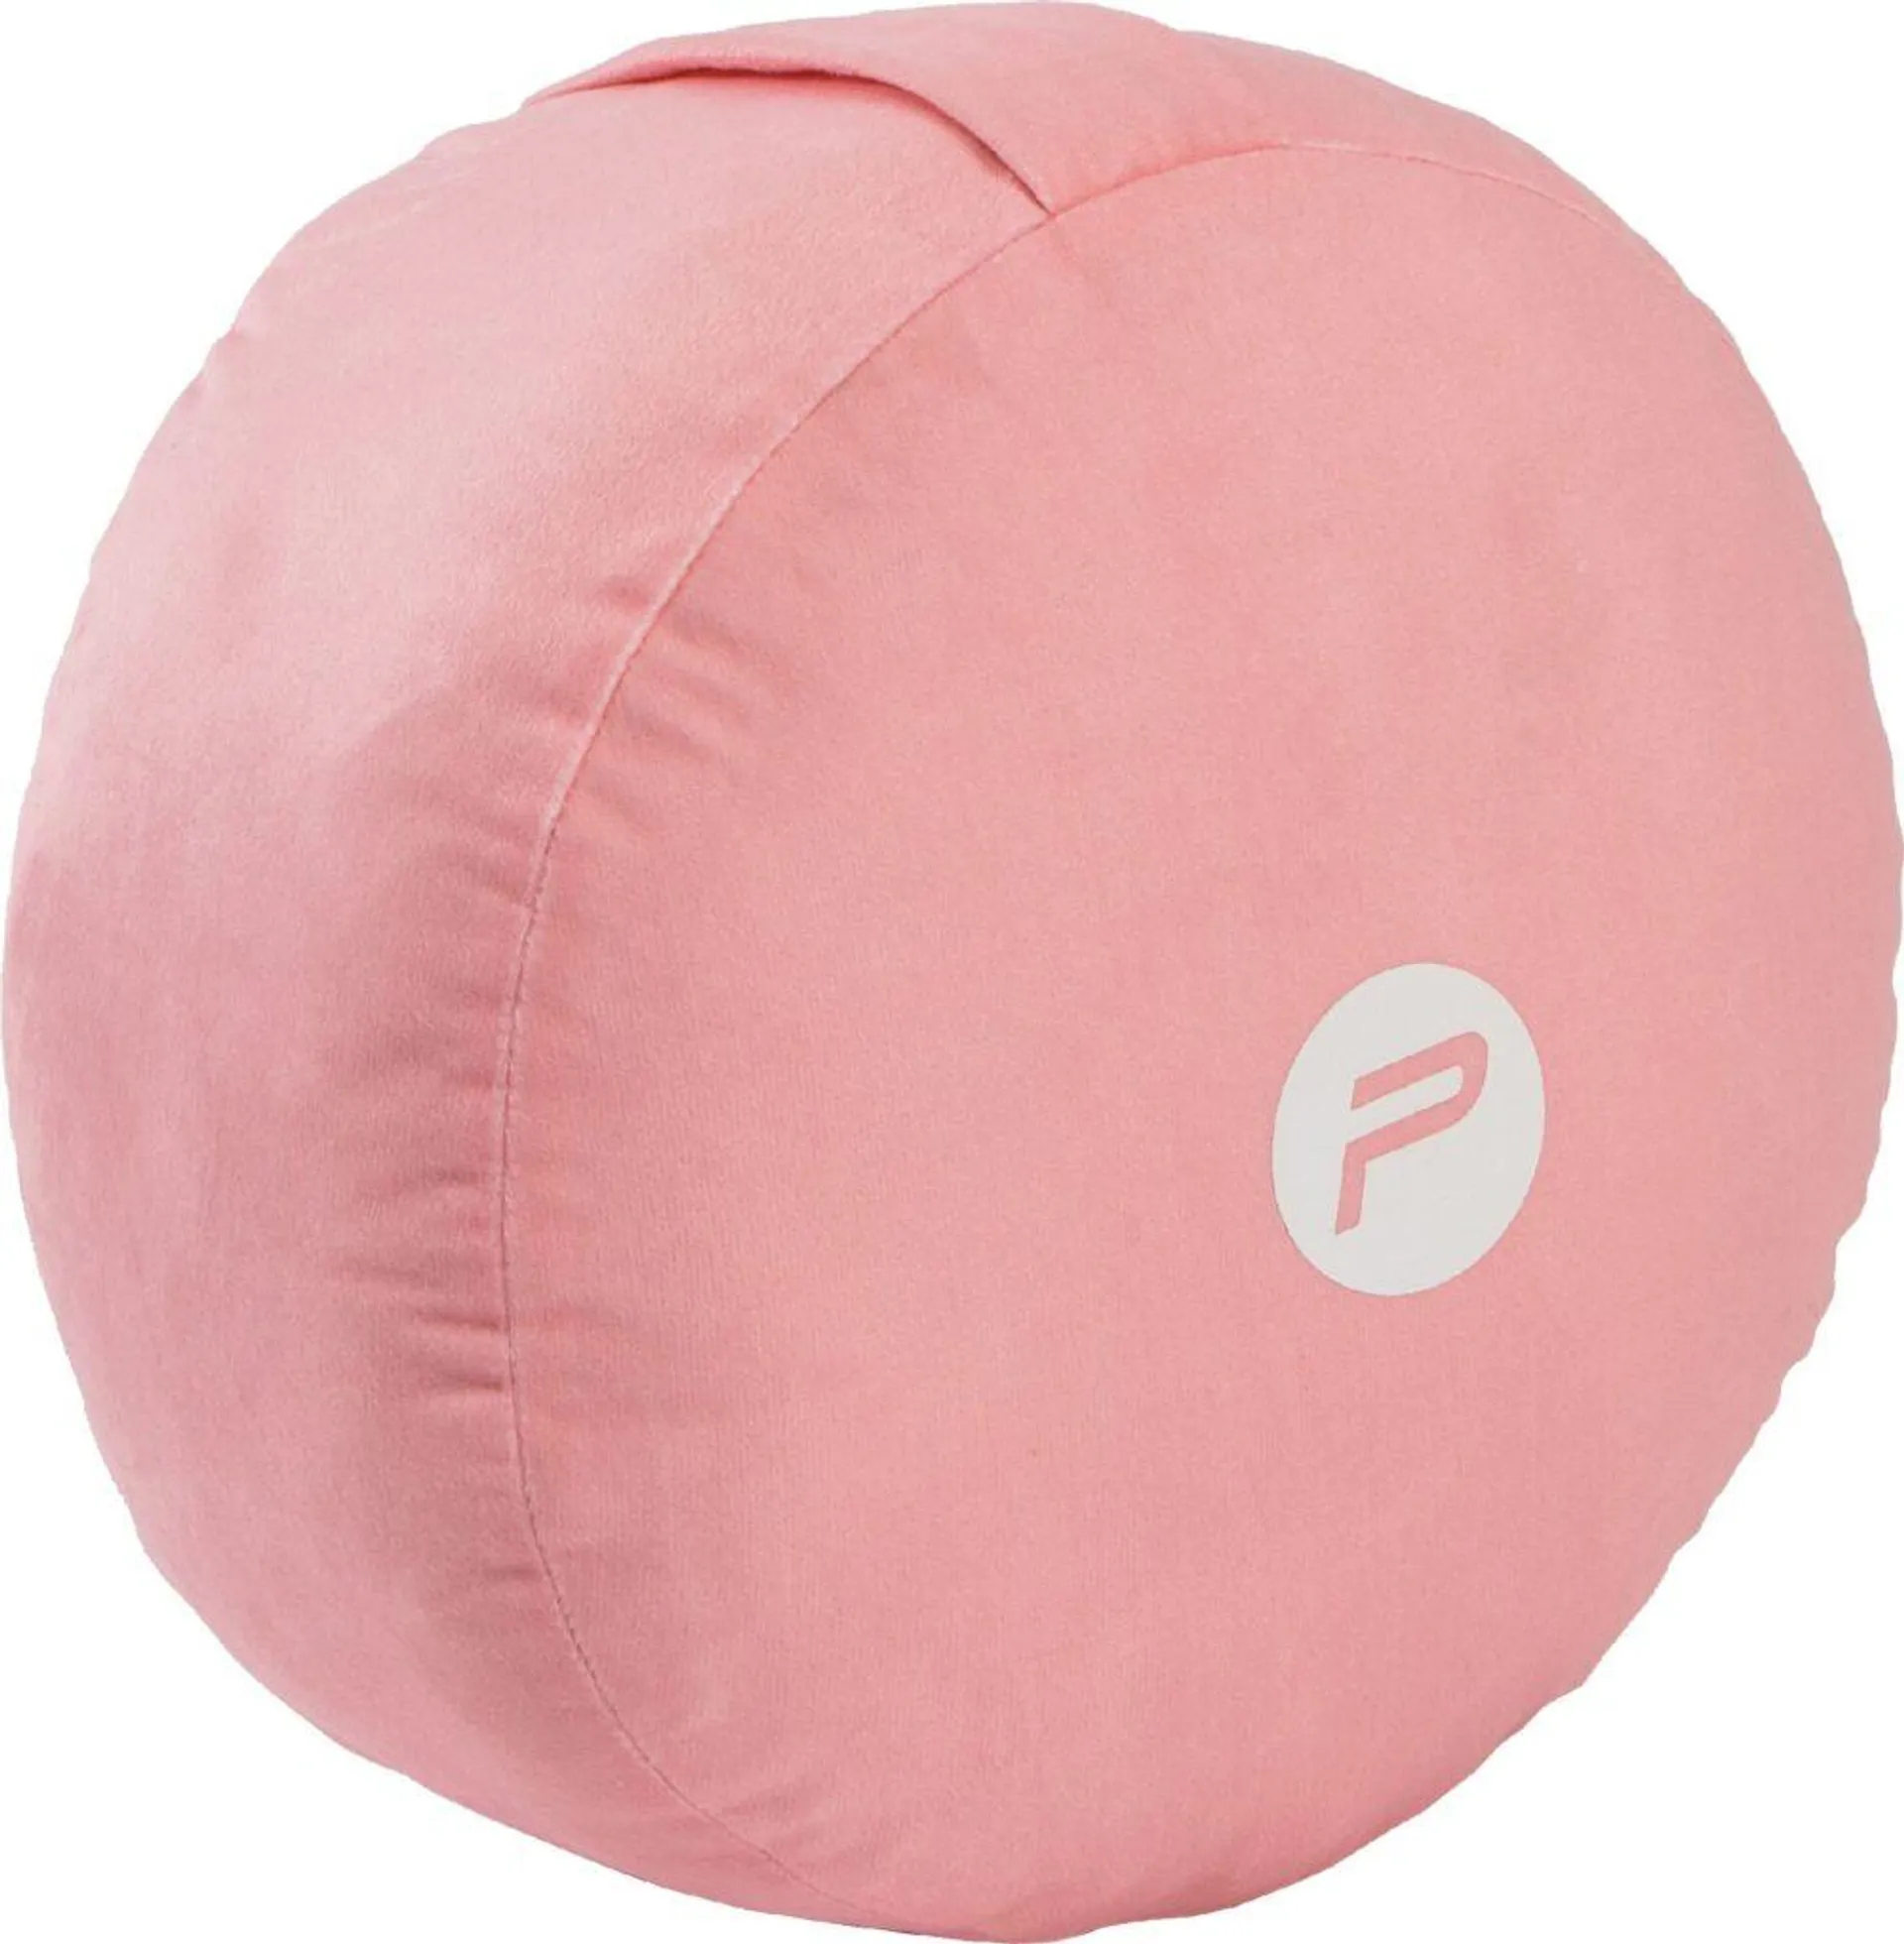 Pure 2 Improve Yoga Meditation Pillow pink